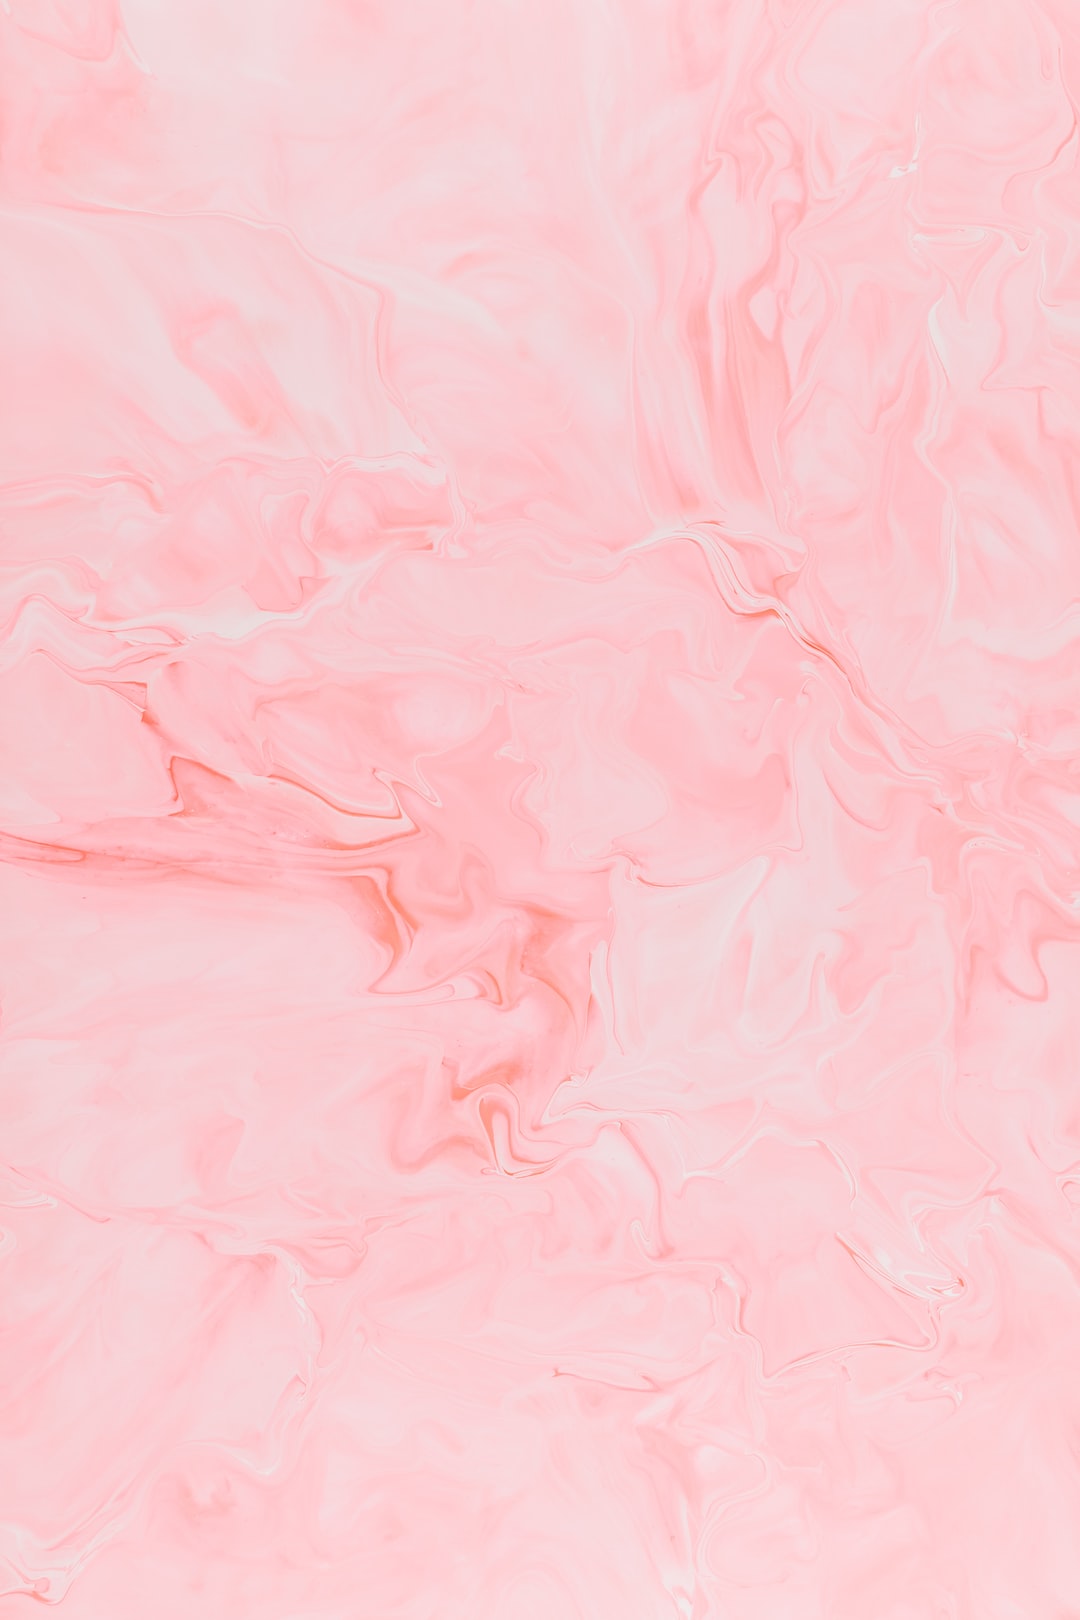 Wallpaper Pink Iphone - KibrisPDR